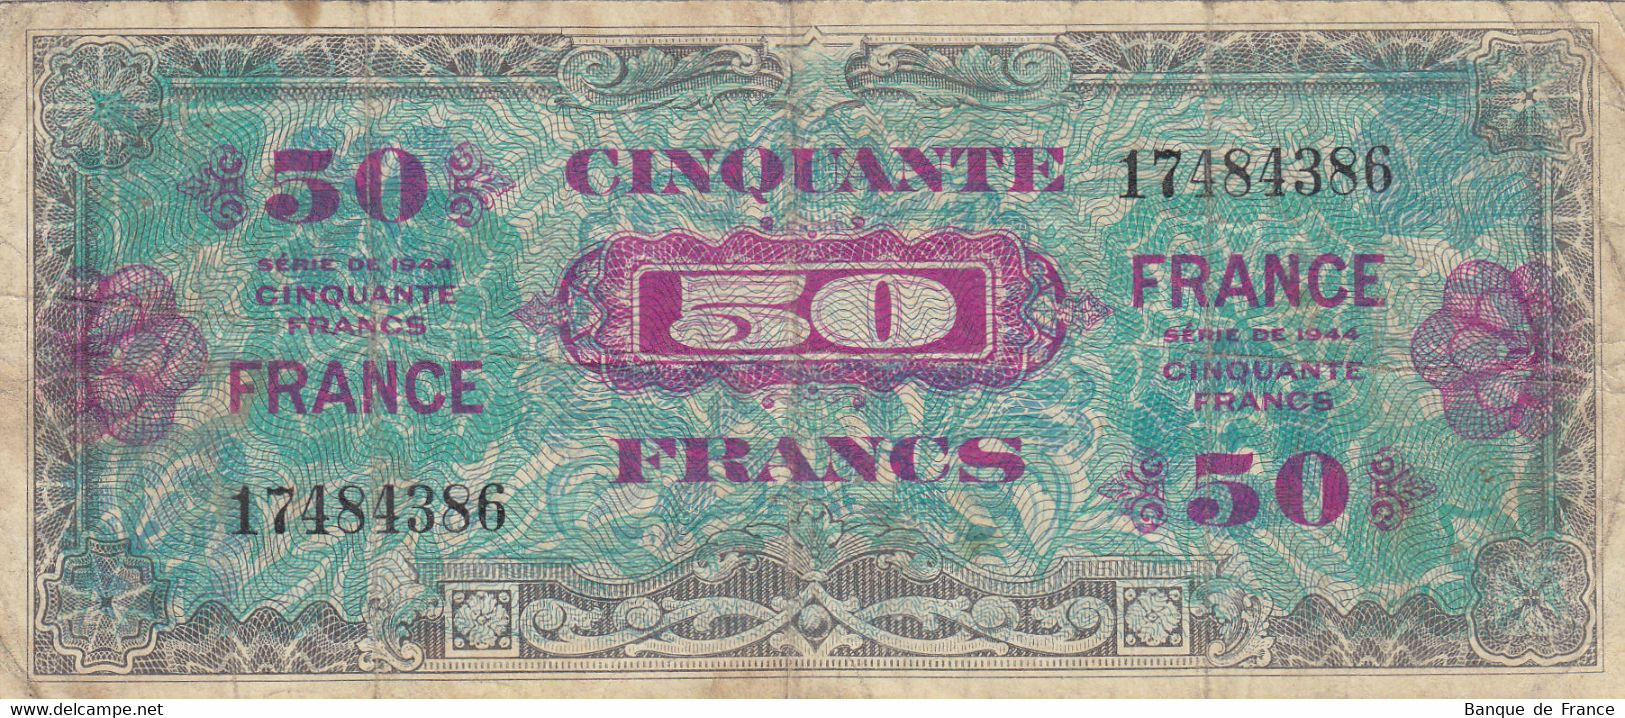 Billet 50 F 1945 Verso France Sans Série FAY VF.24.01 N° 17484386 - 1945 Verso France